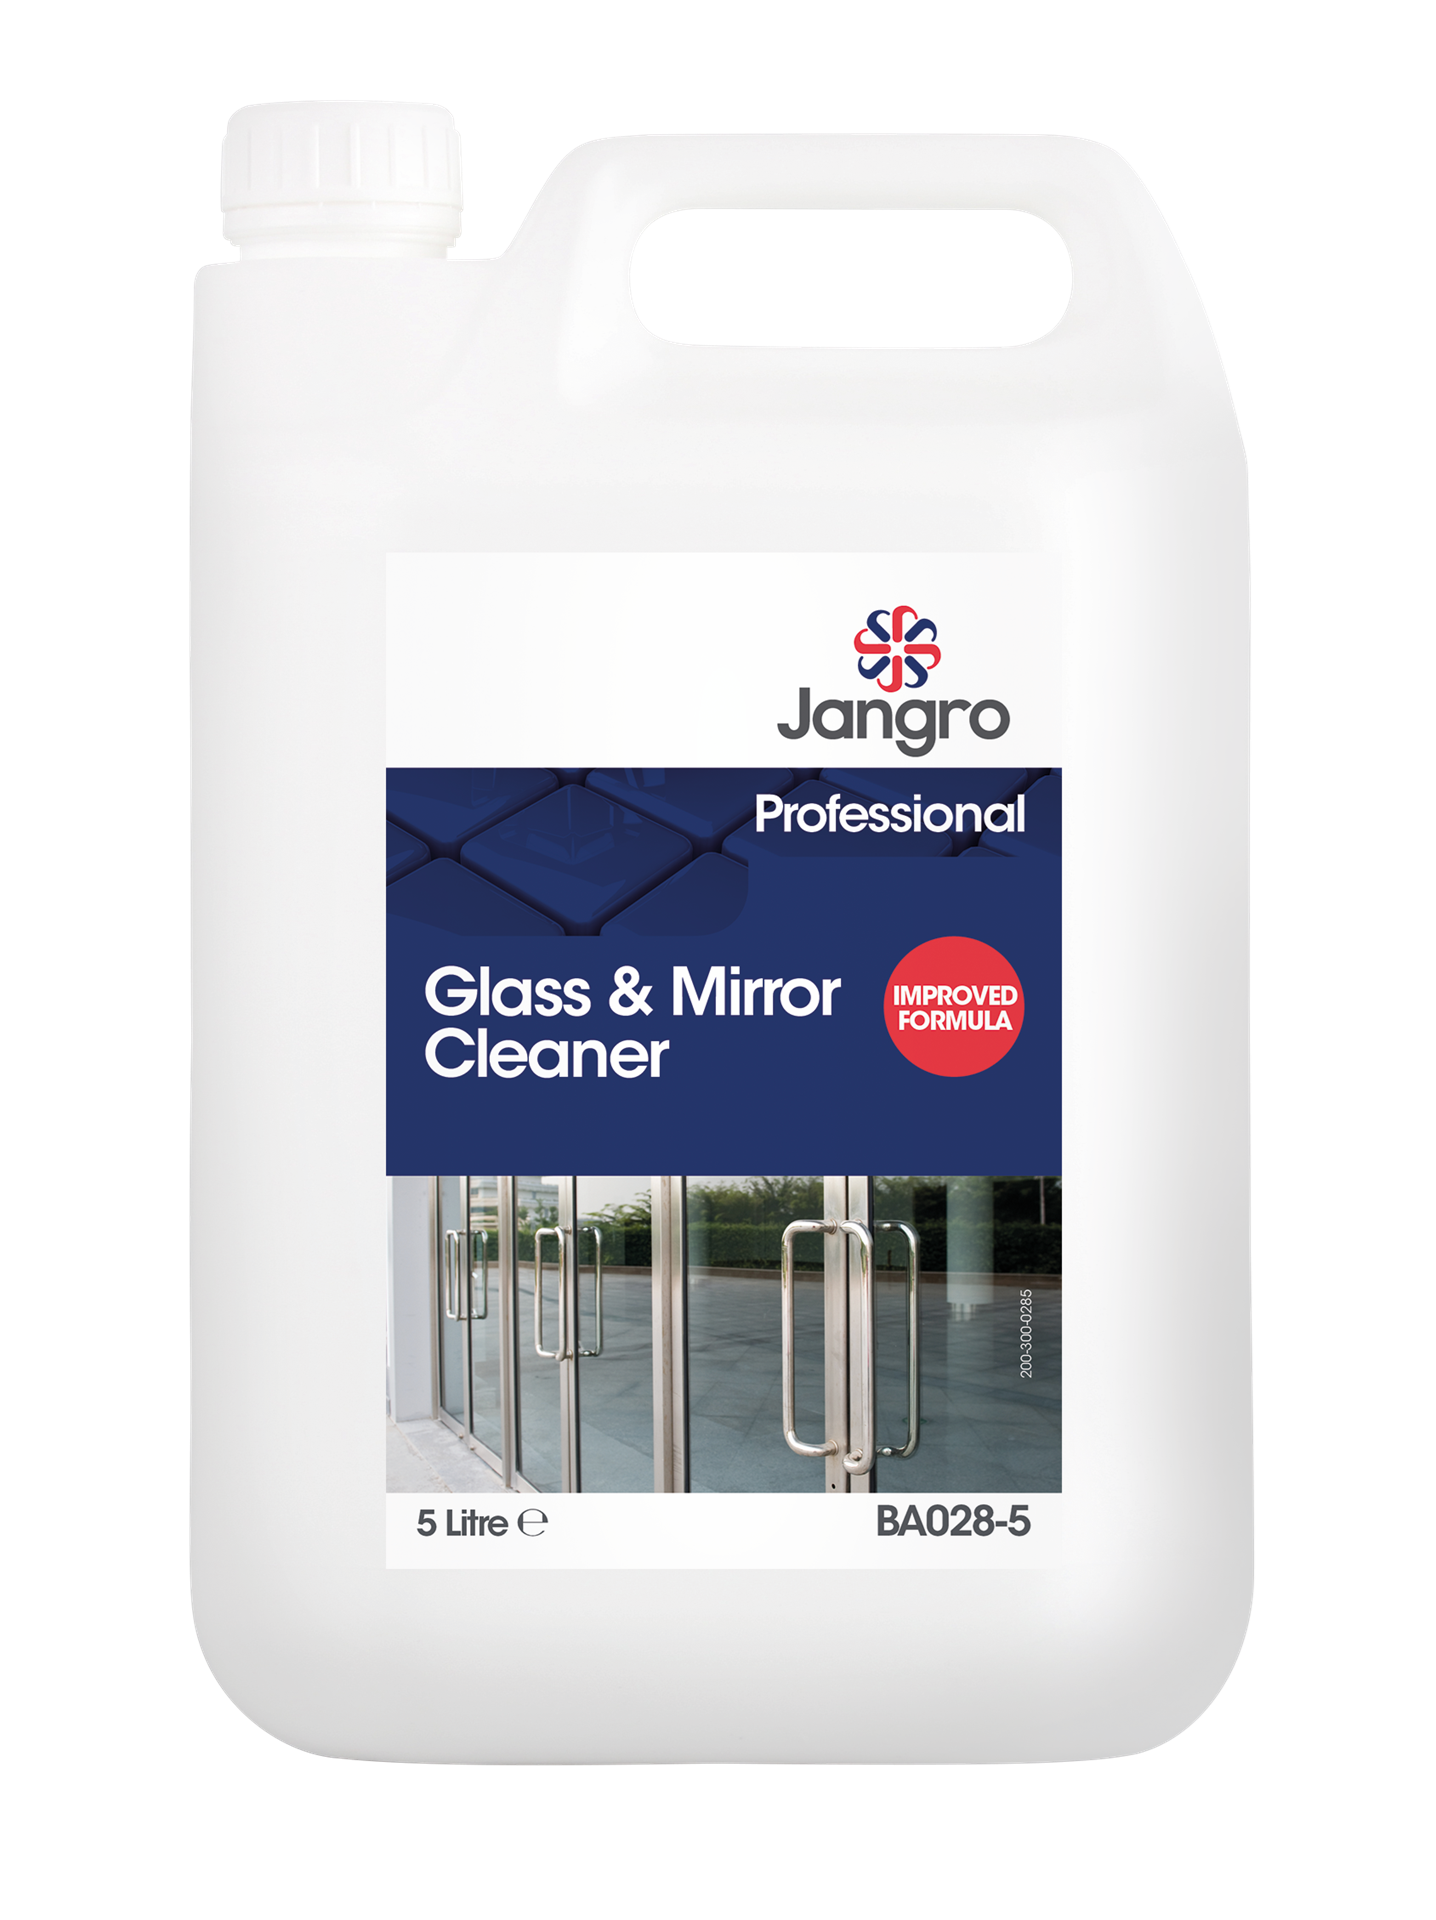 Jangro Professional Glass & Mirror Cleaner, 5 Litre